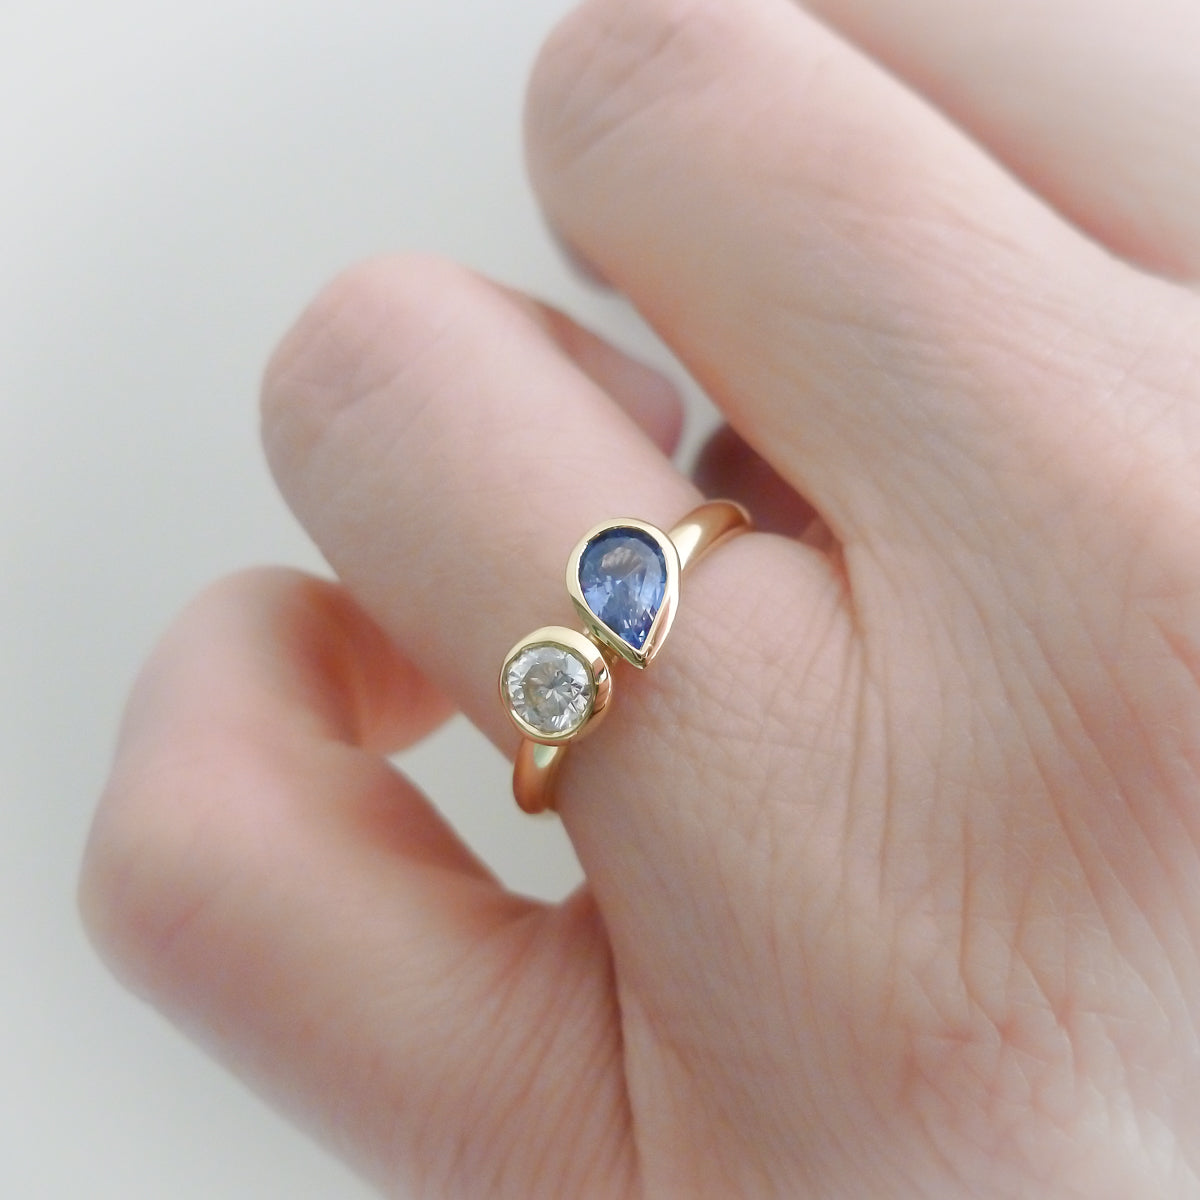 Bespoke pear shape blue sapphire and diamond ring by Sue Lane